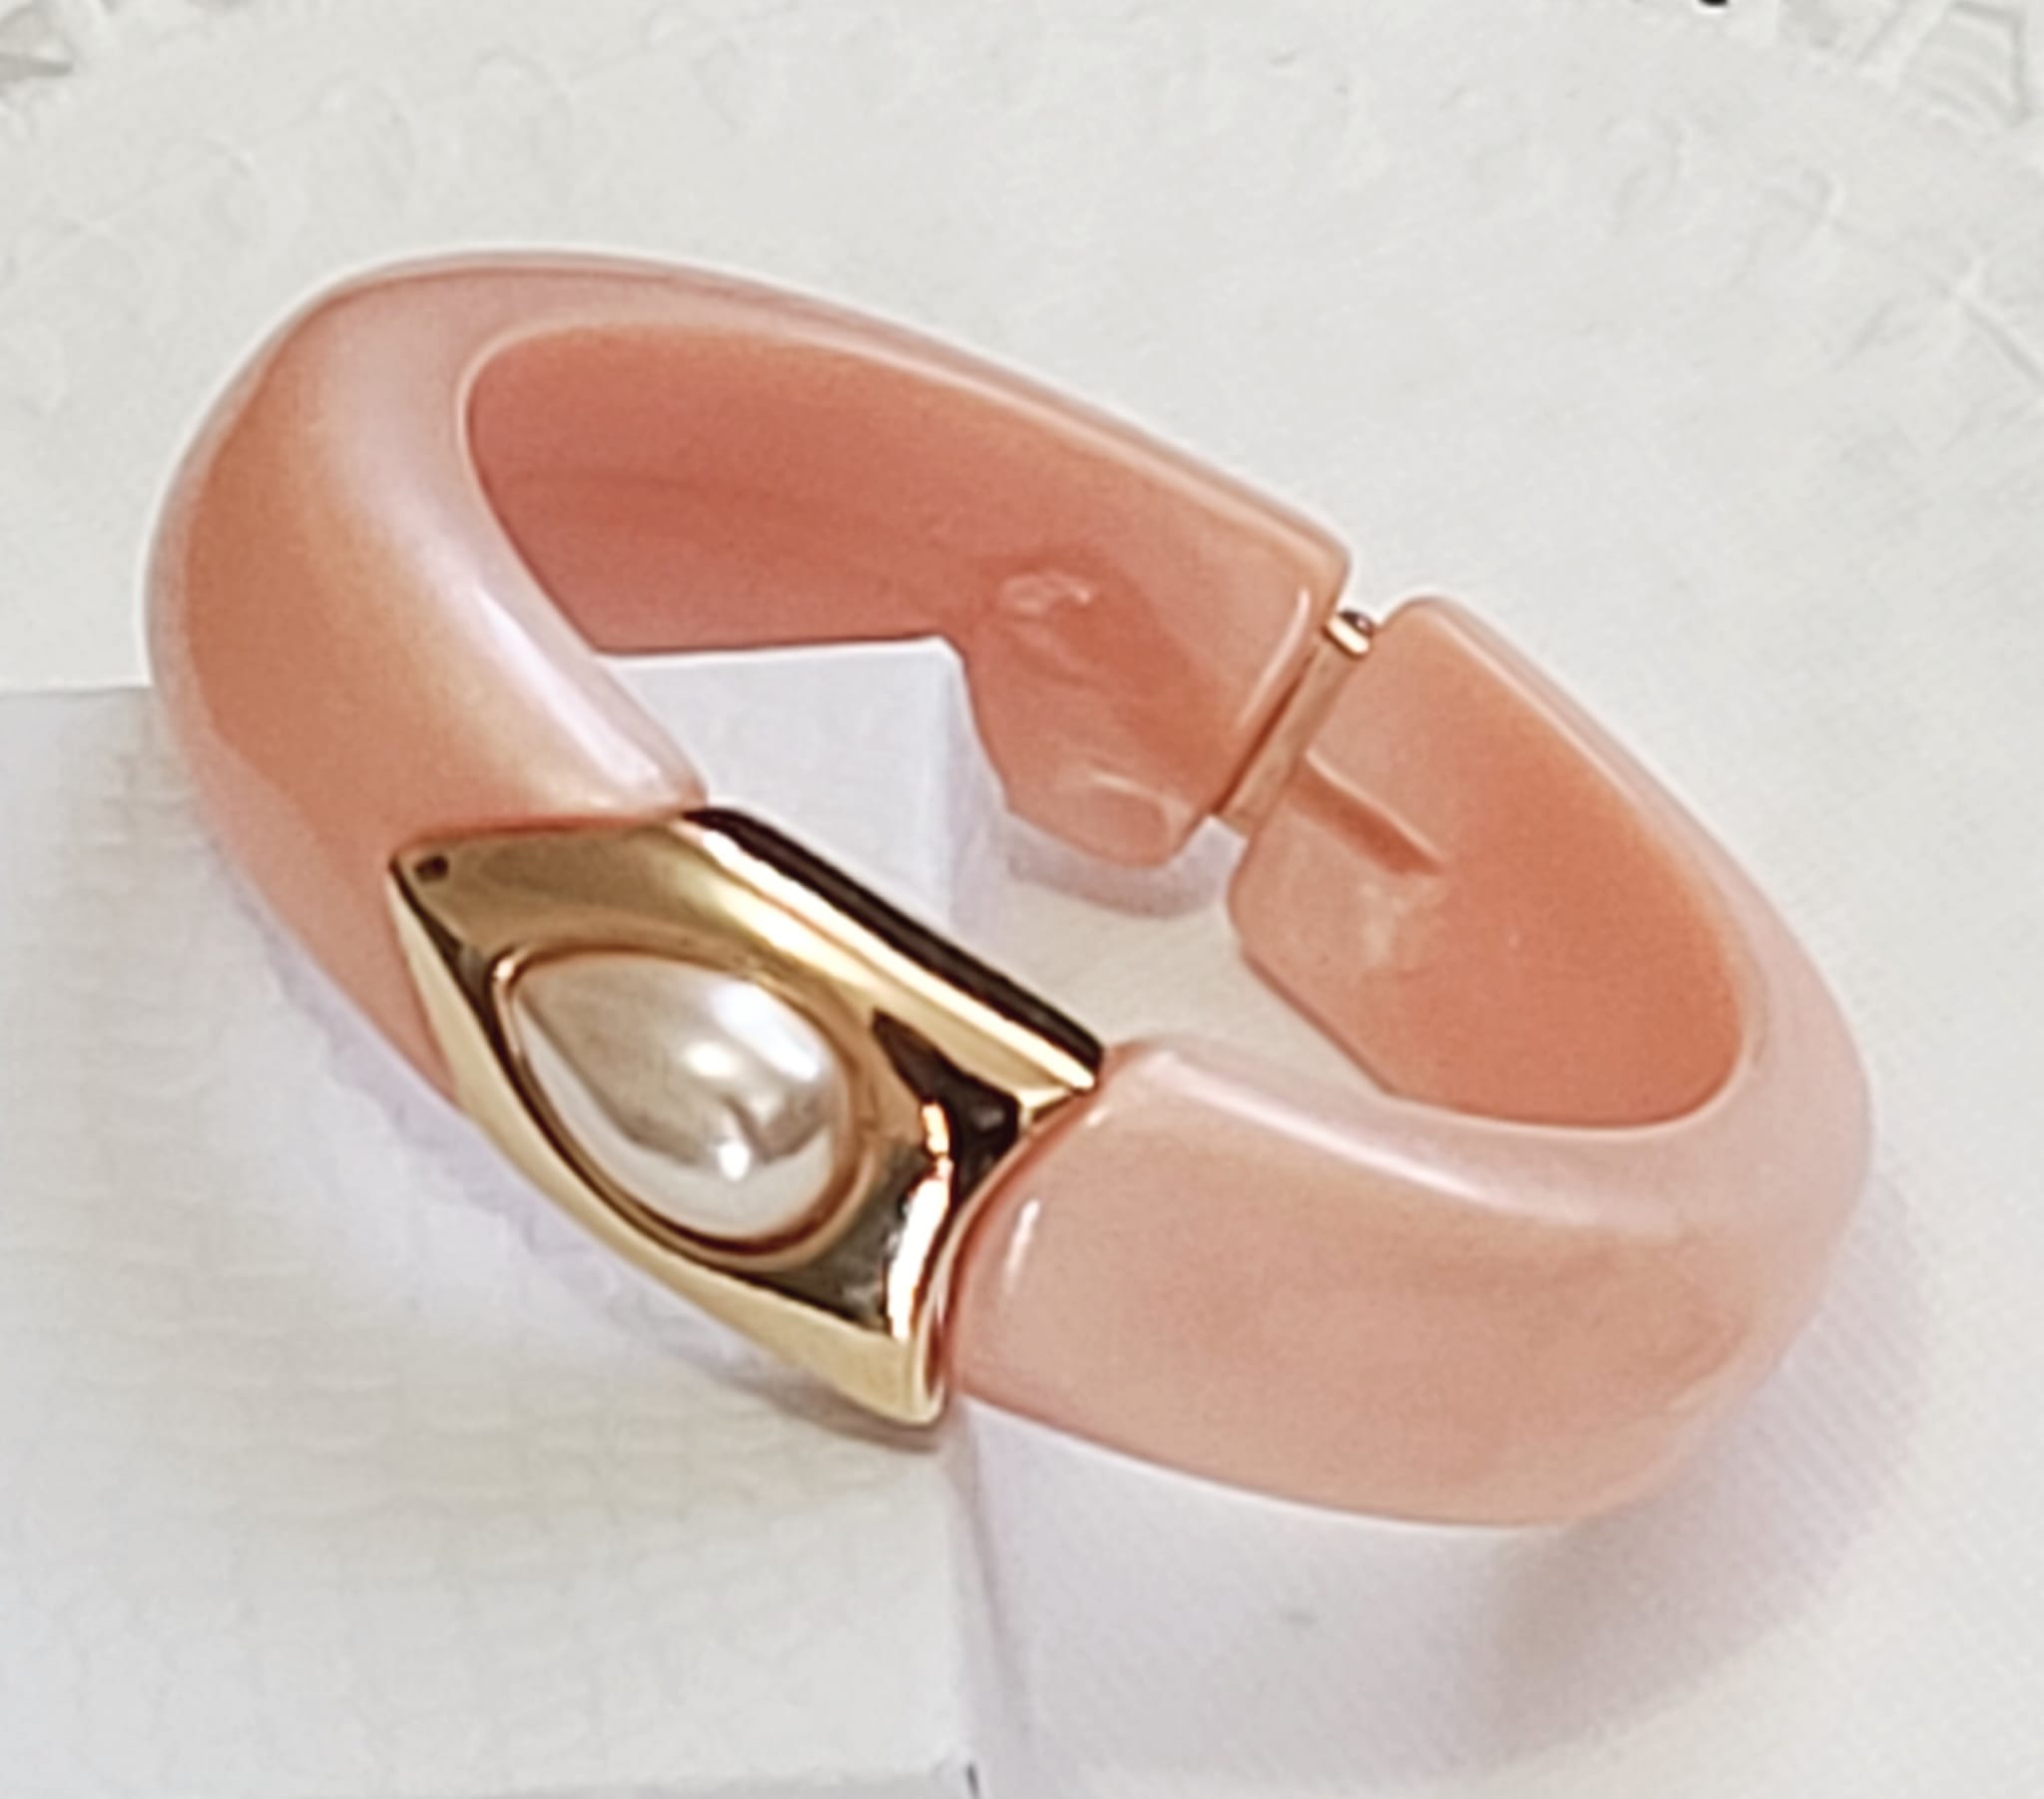 Napier peach bangle bracelet with center pearl